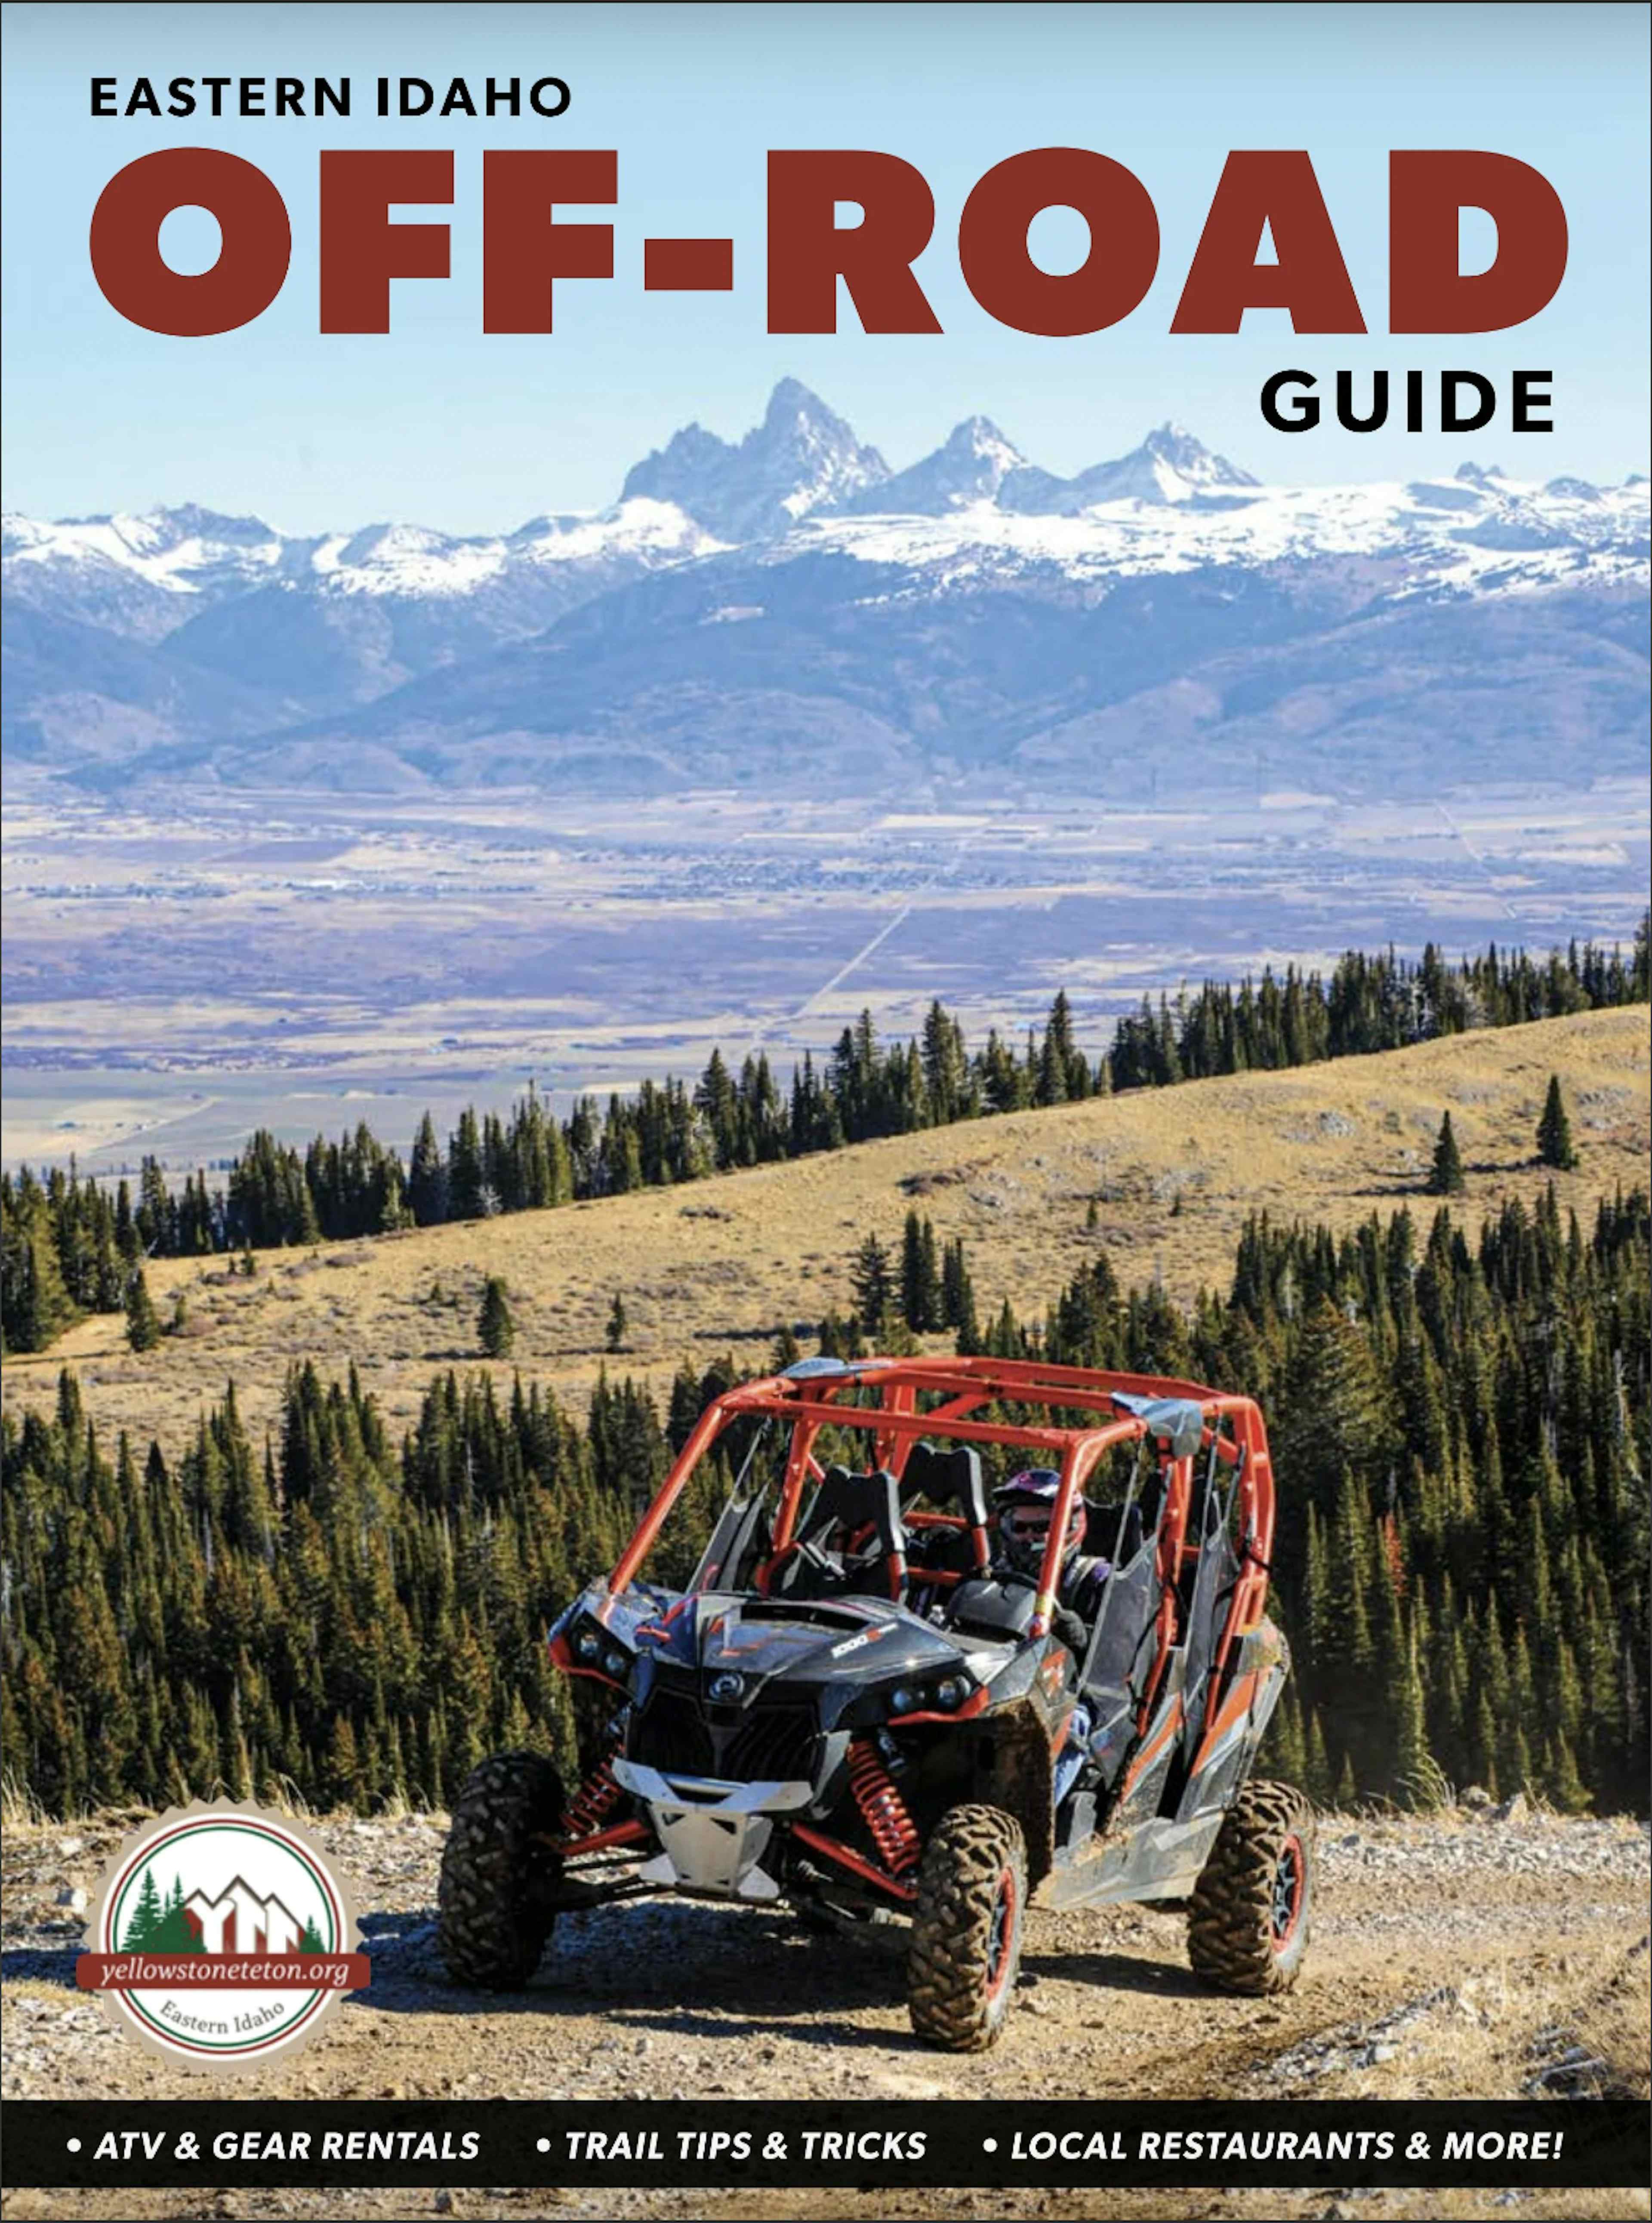 Eastern Idaho Off-Road Guide